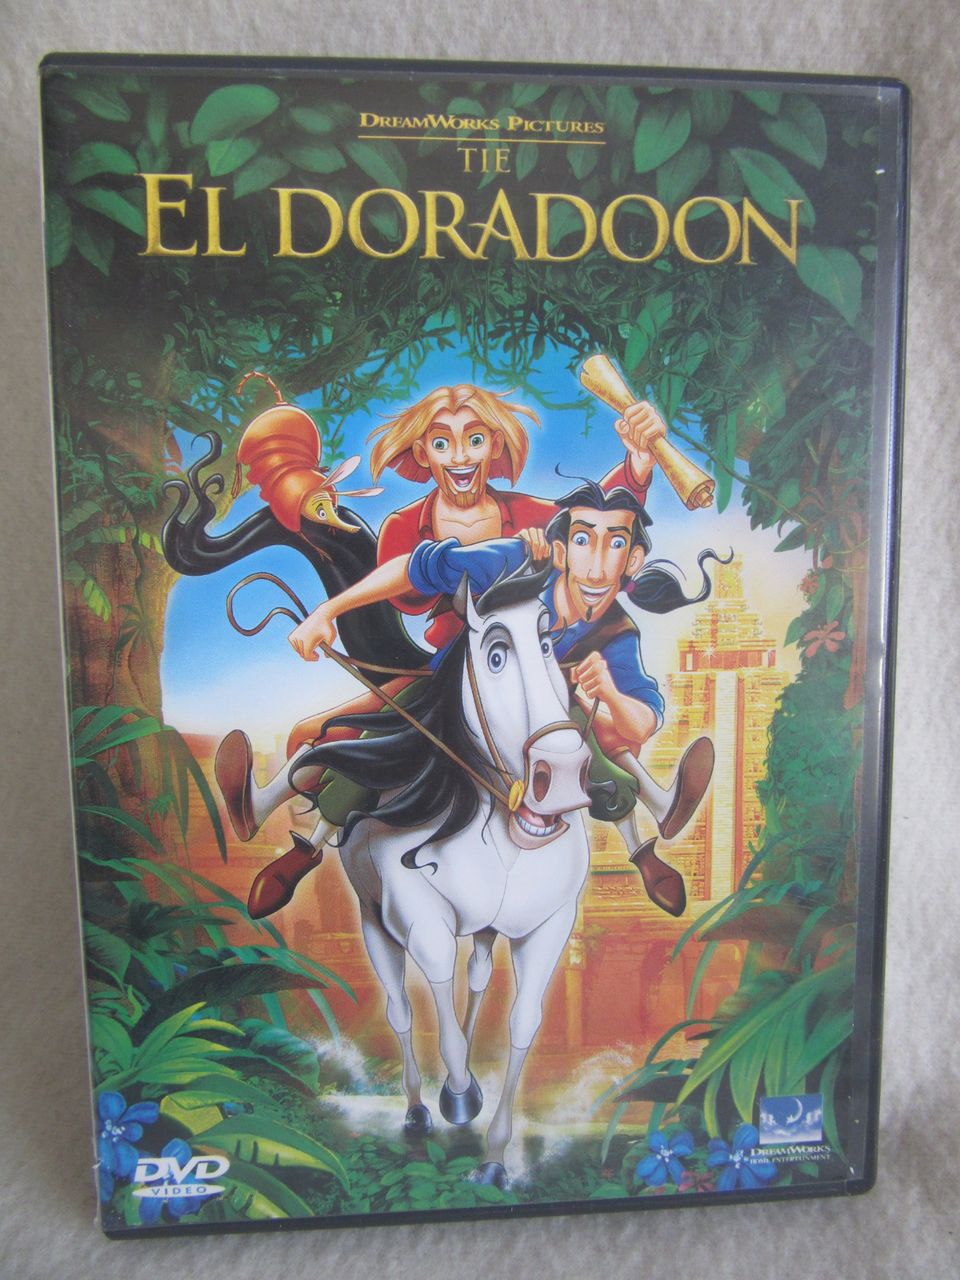 Tie Eldoradoon dvd